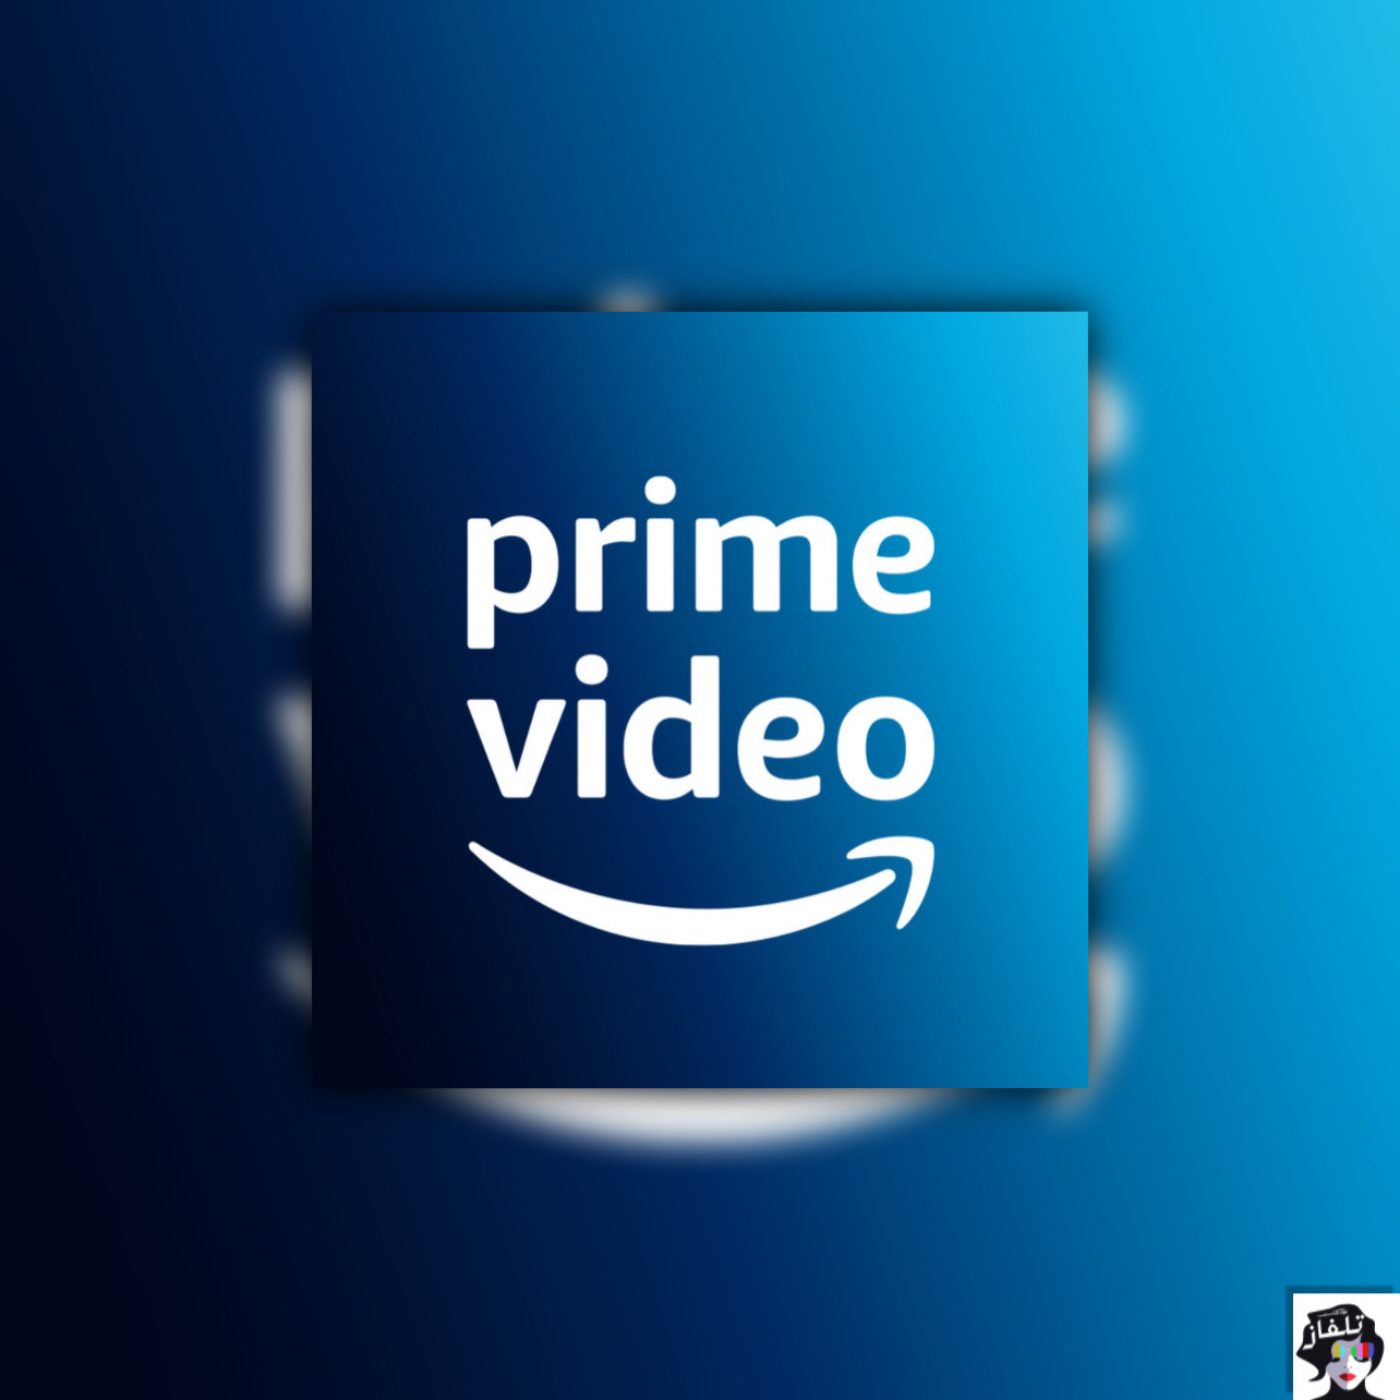 List of TV Shows on Amazon Prime Video - مجموعة مسلسلات على خدمة آمازون برايم فيديو